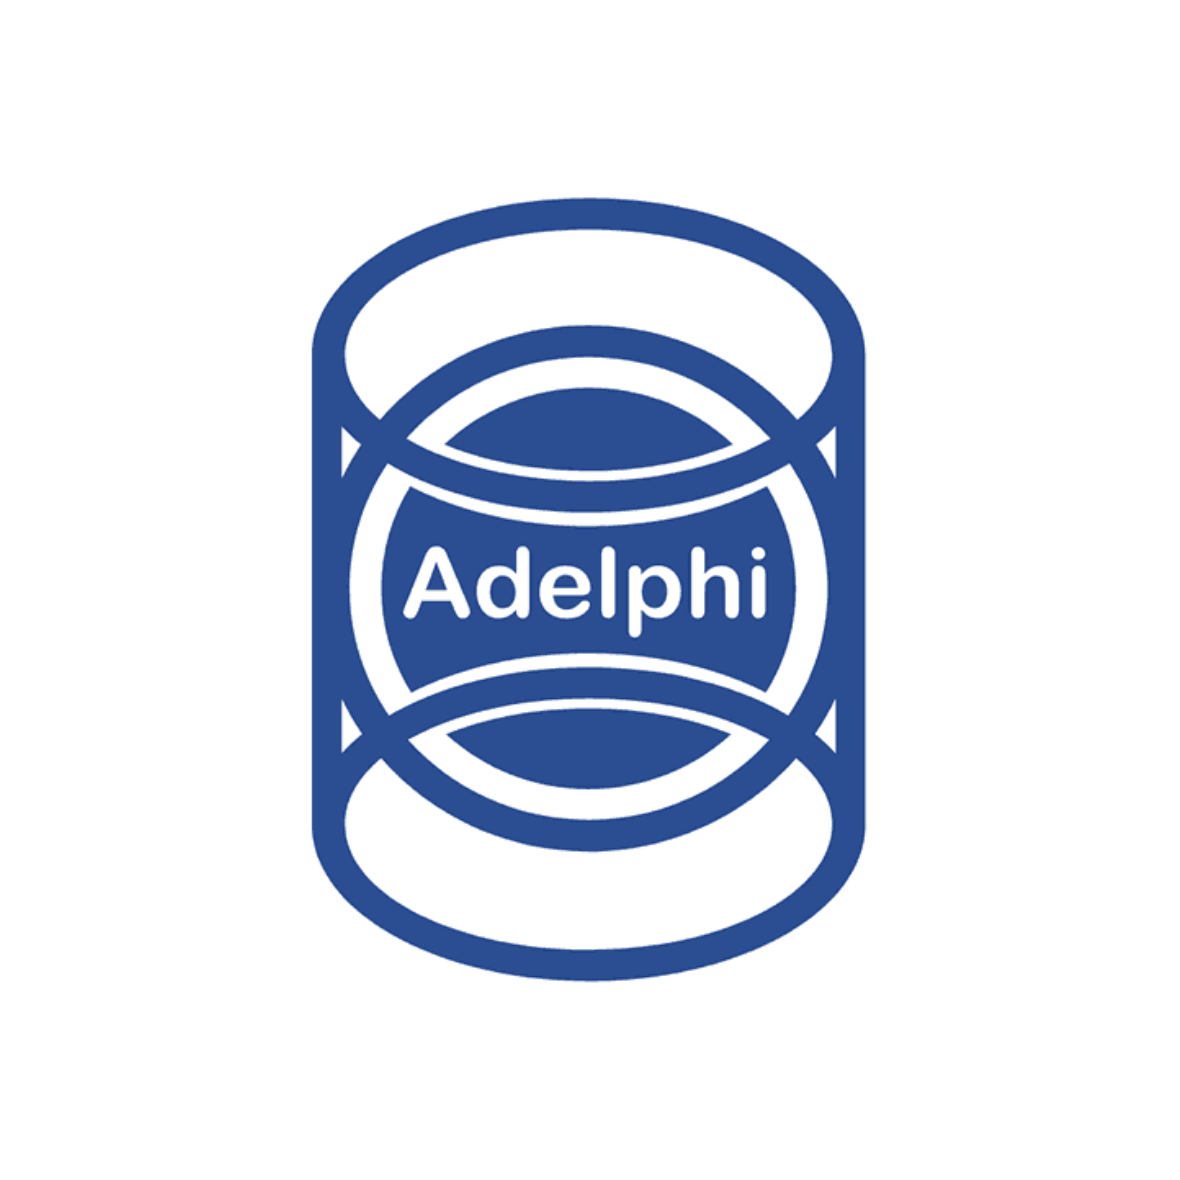 Adelphi Group of Companies Logo